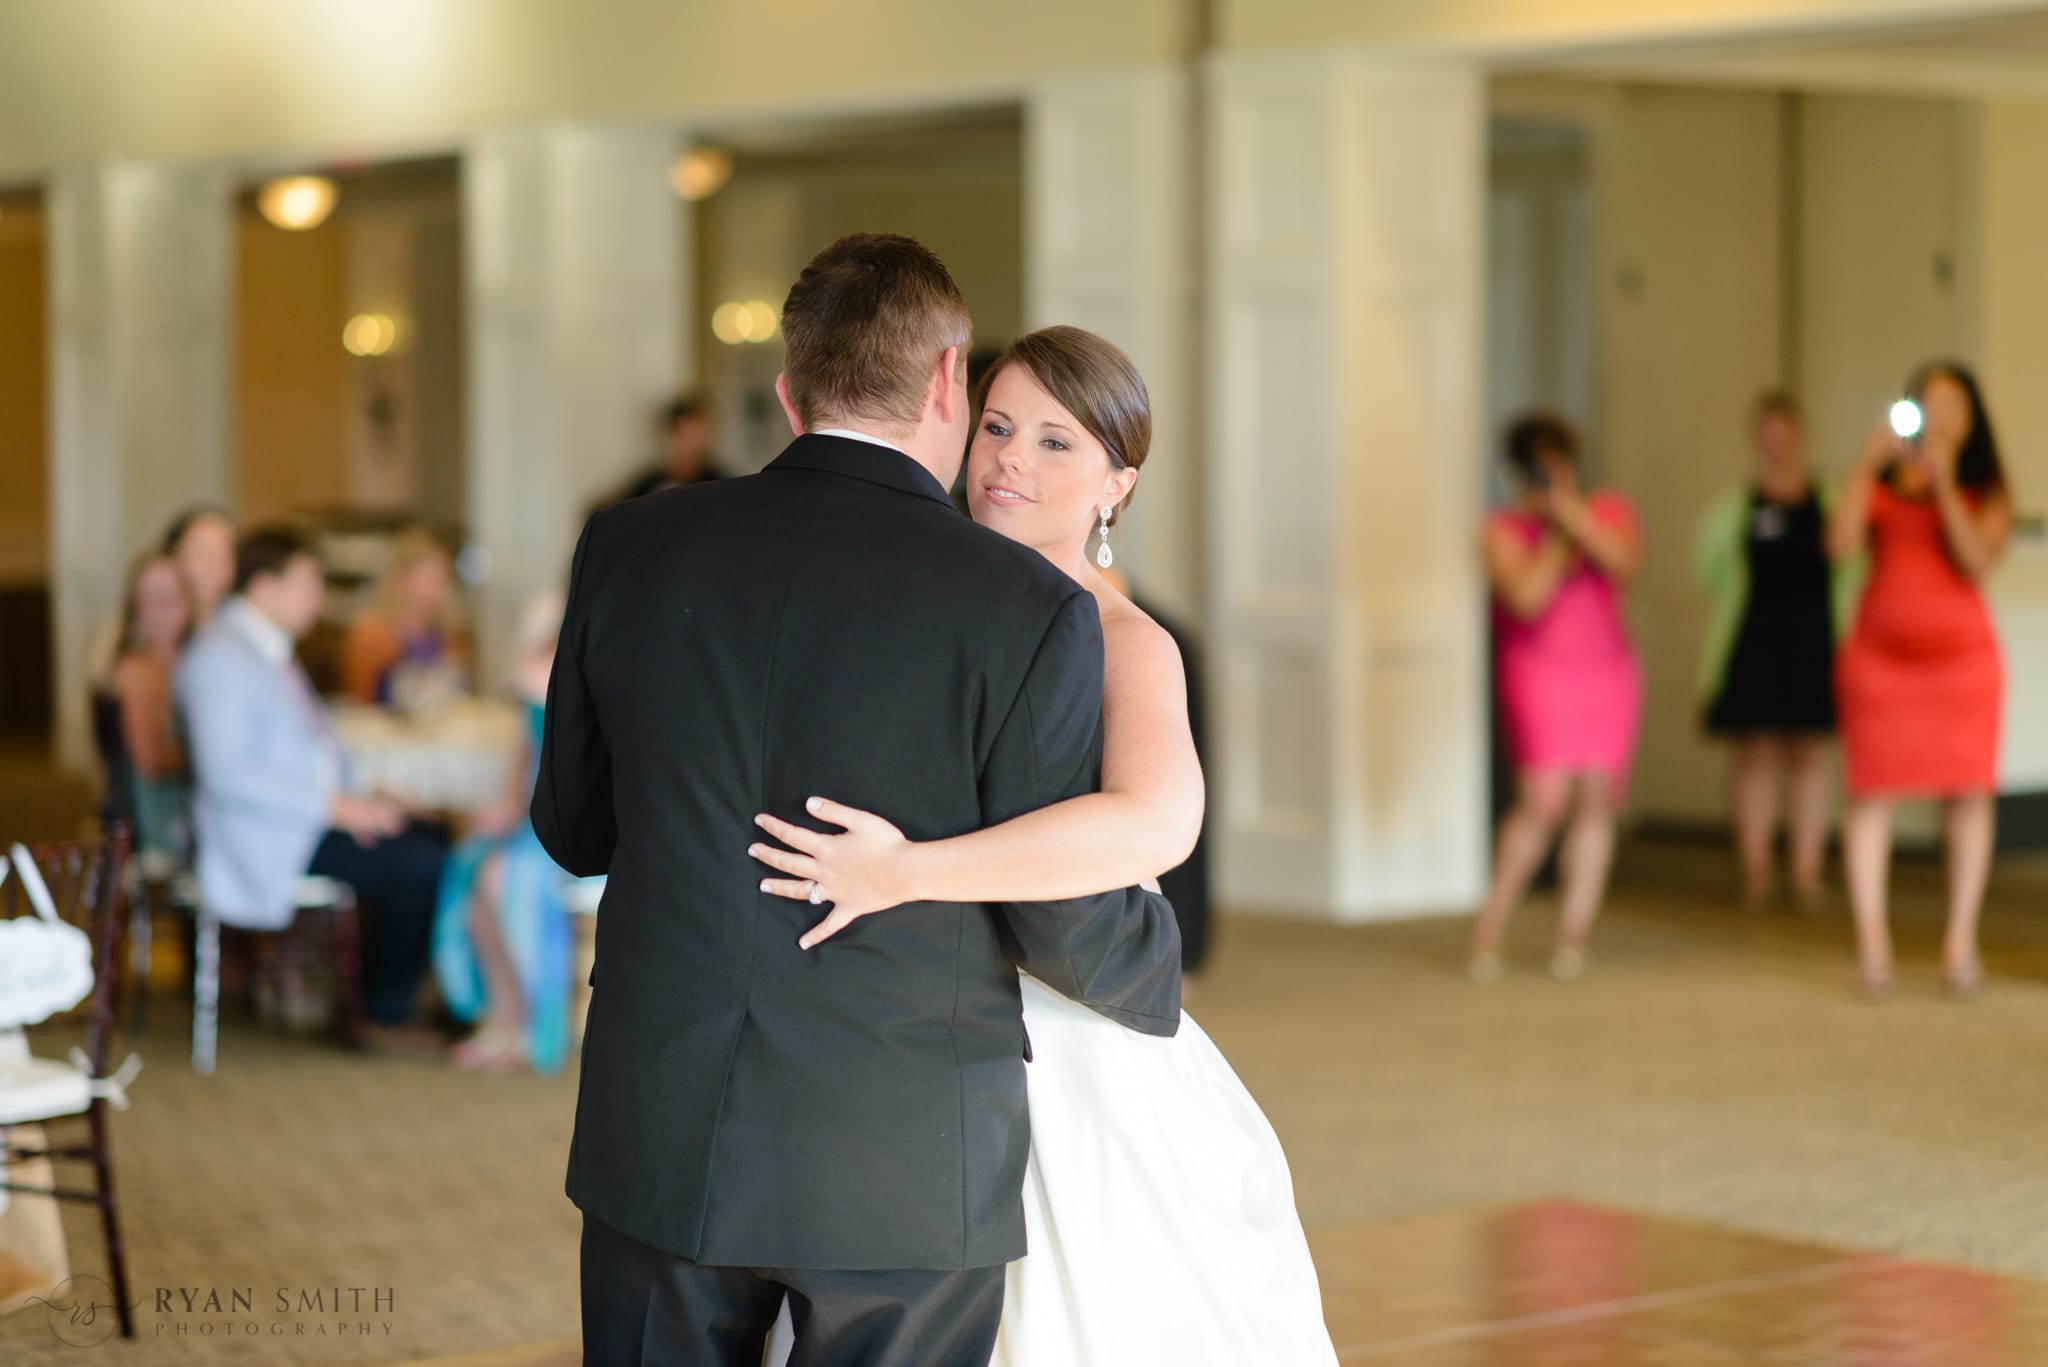 First dance with bride and groom - Daniel Island Club - Charleston, SC